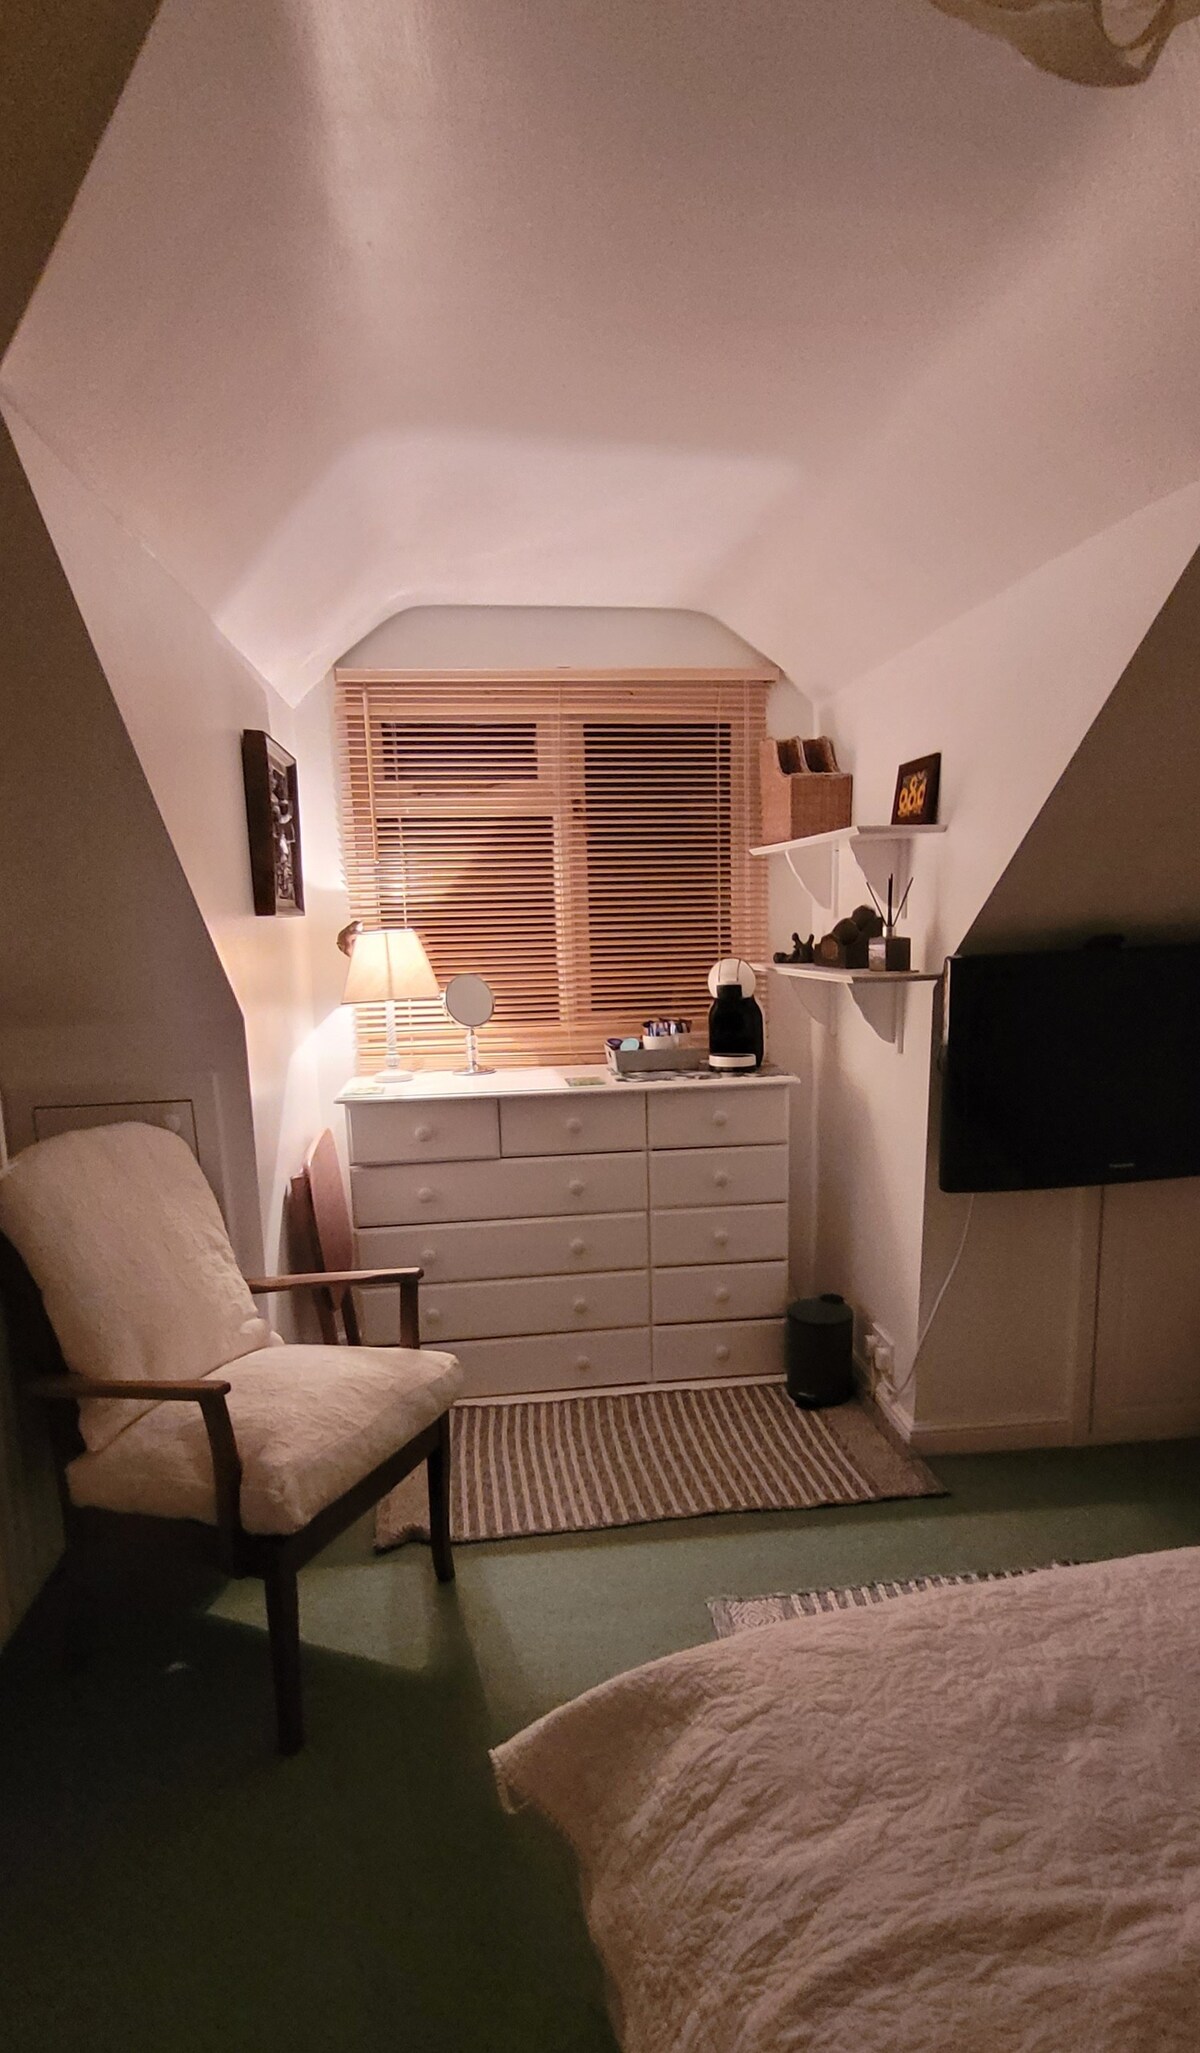 Large Double Room in Quiet Cul-de-sac.